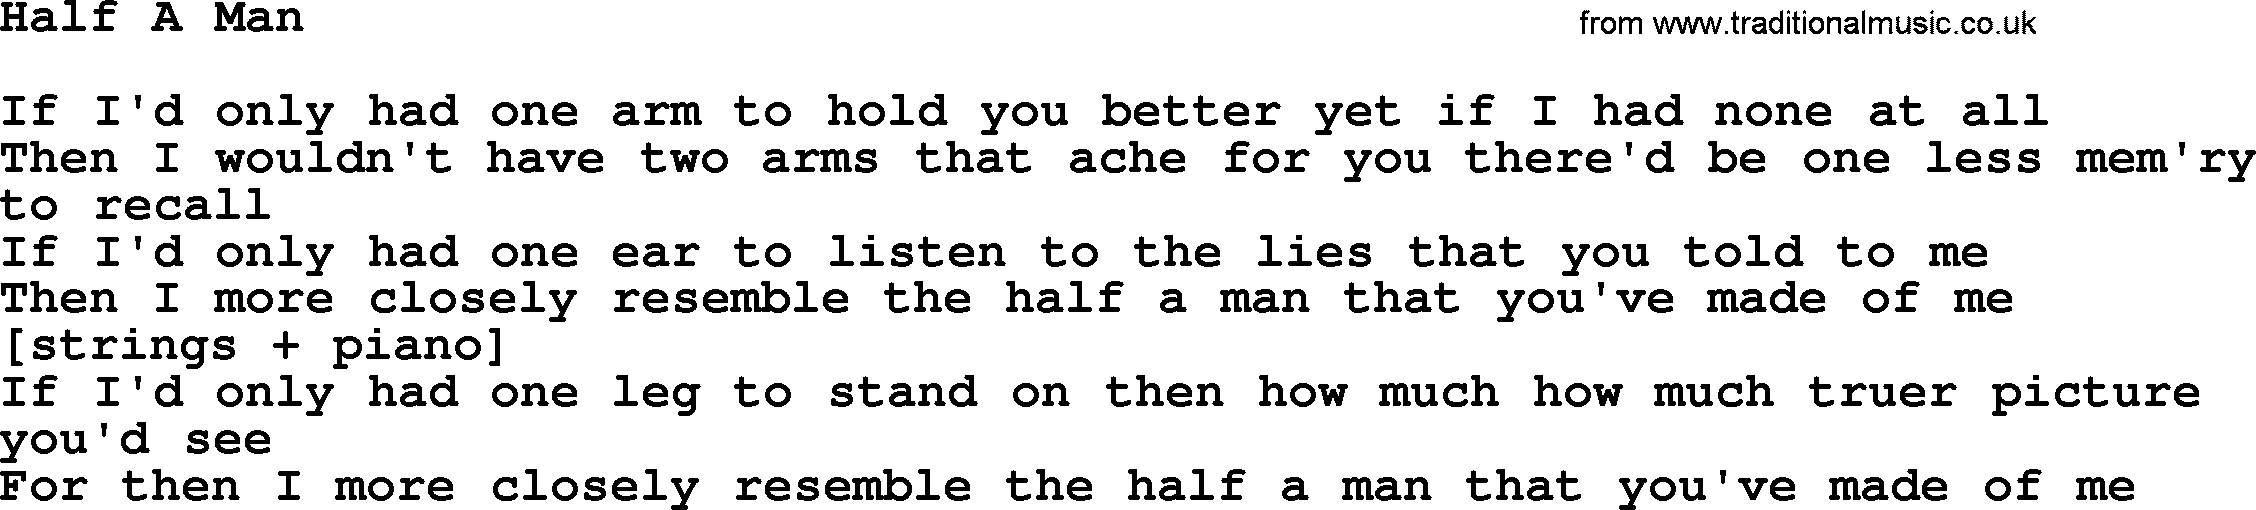 Willie Nelson song: Half A Man lyrics